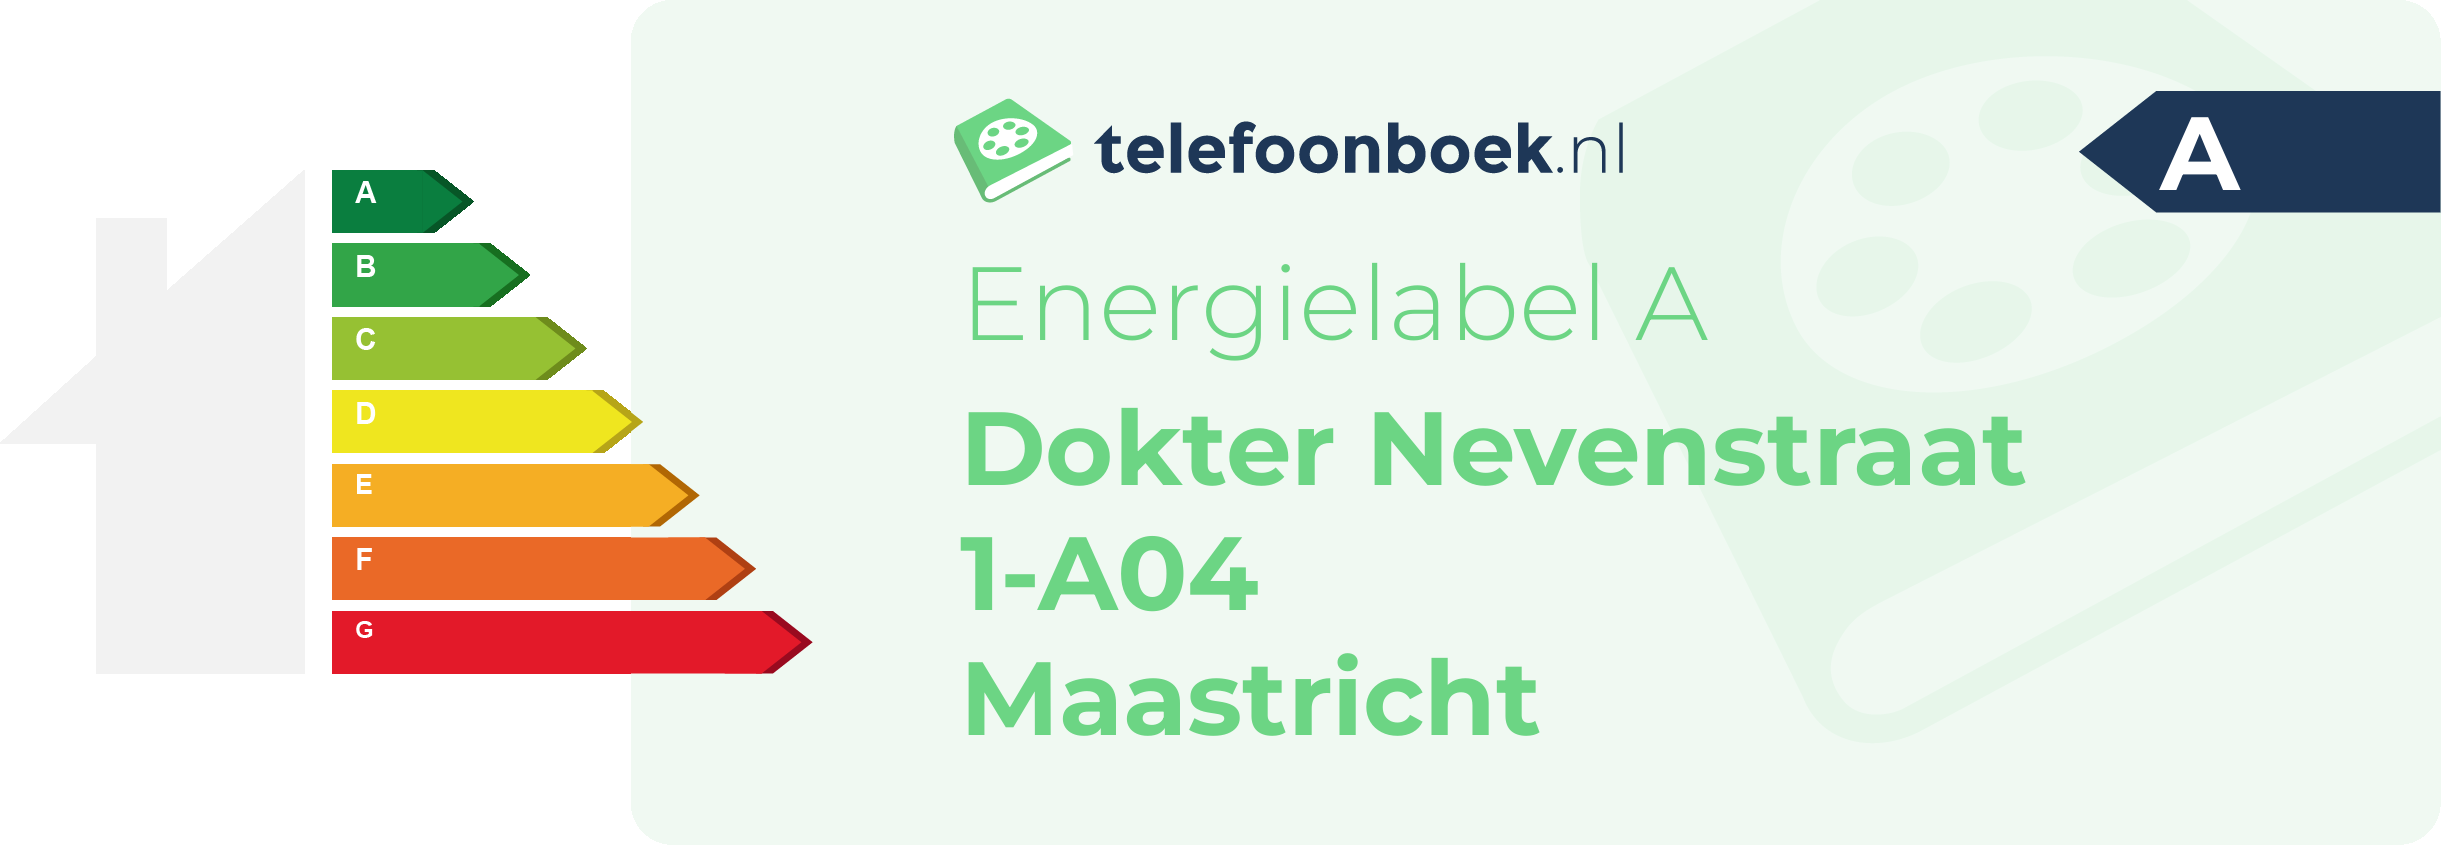 Energielabel Dokter Nevenstraat 1-A04 Maastricht